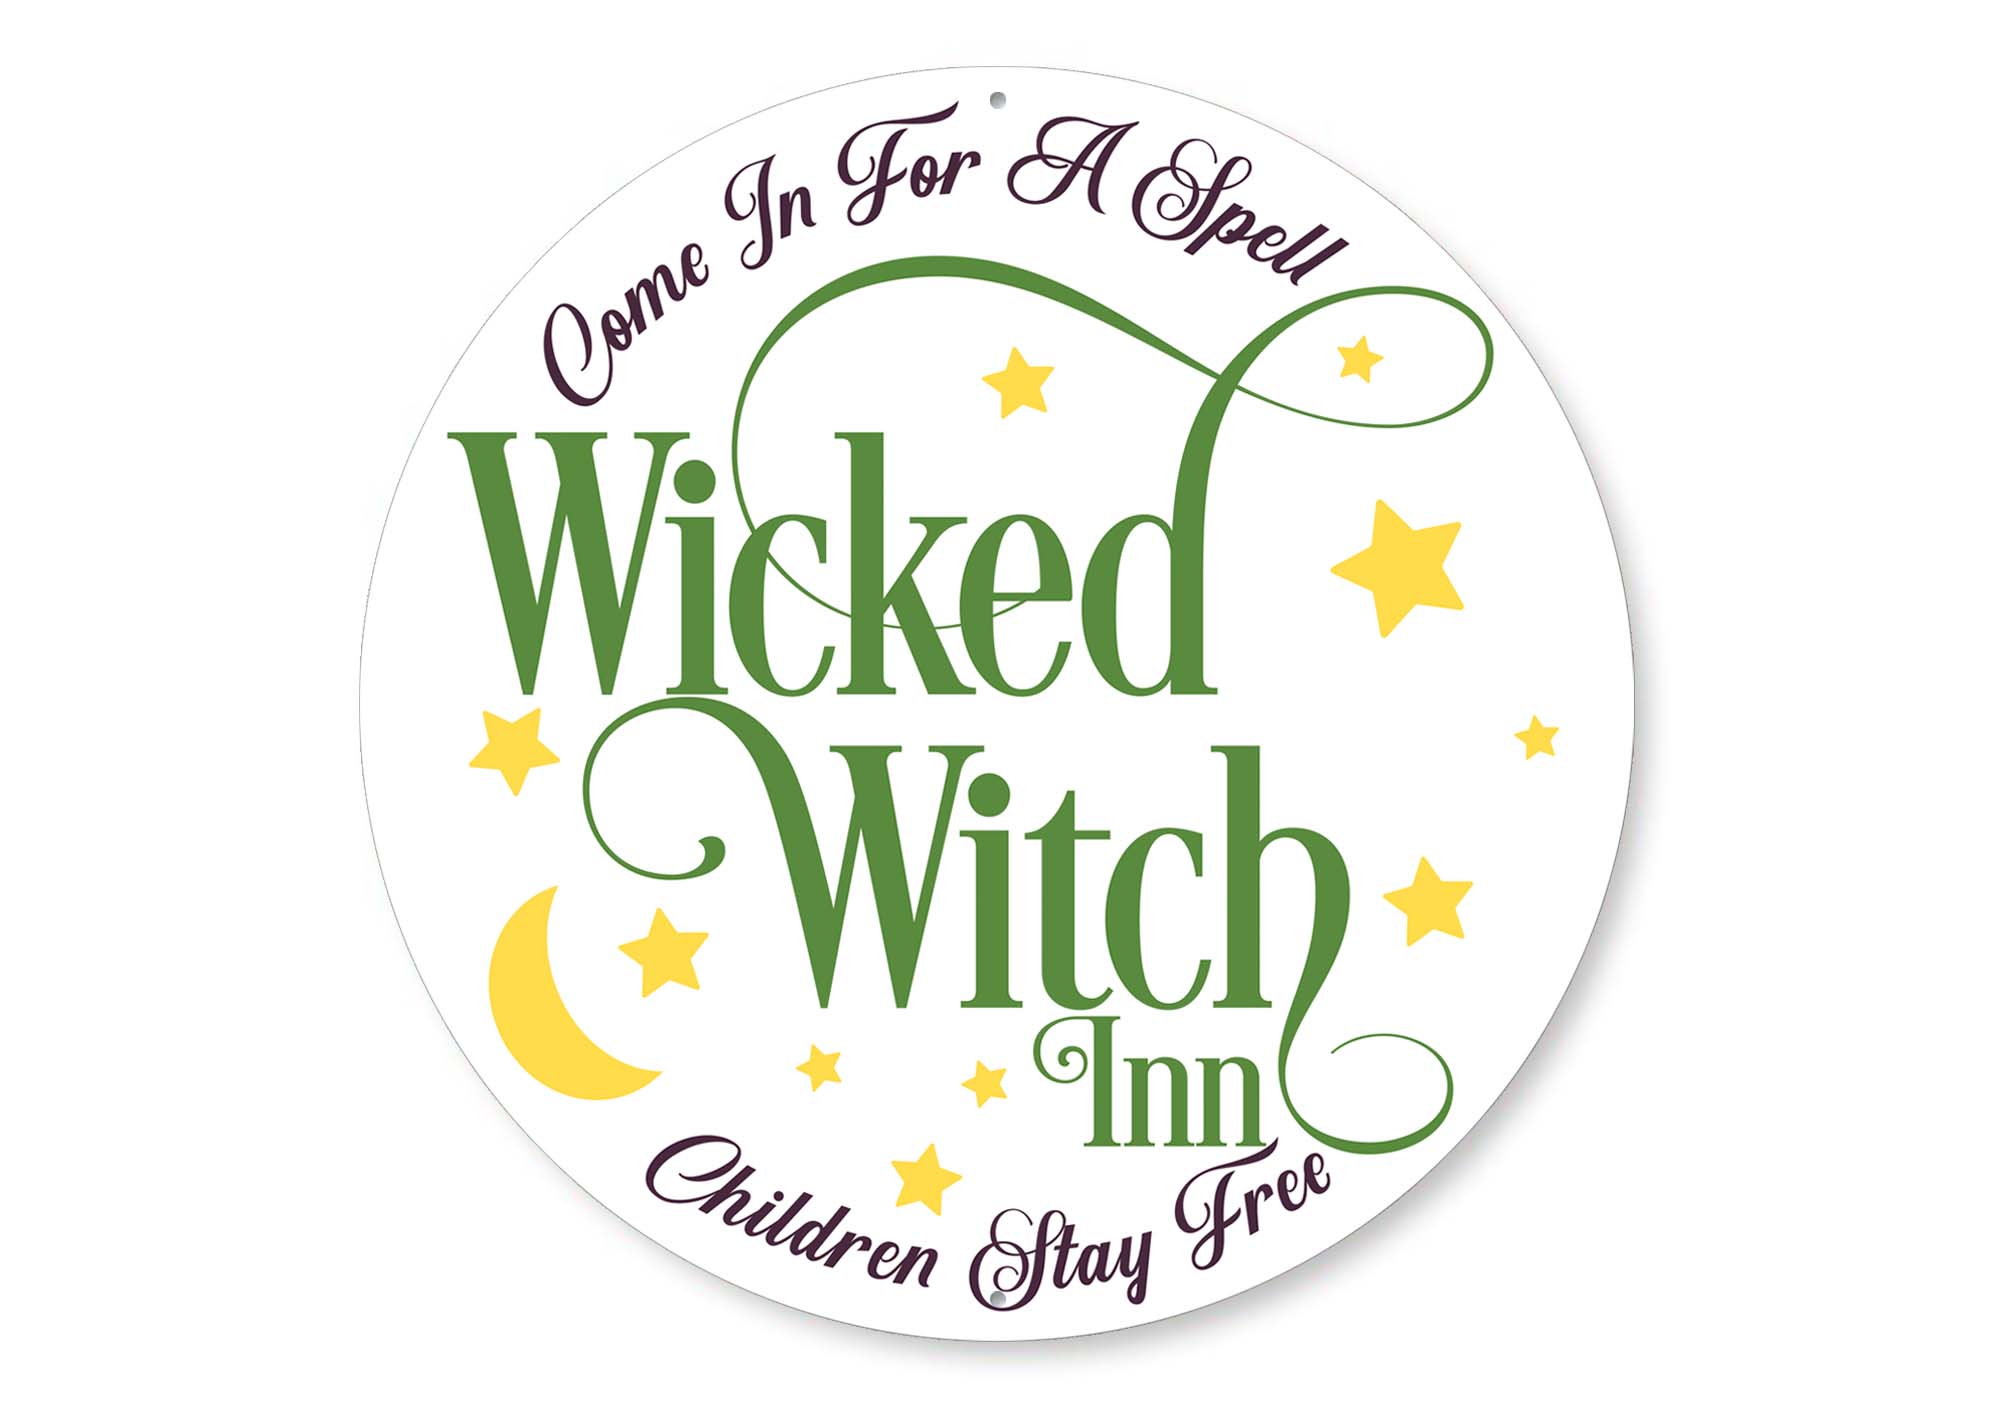 Wicked Witch Inn Round Halloween Sign